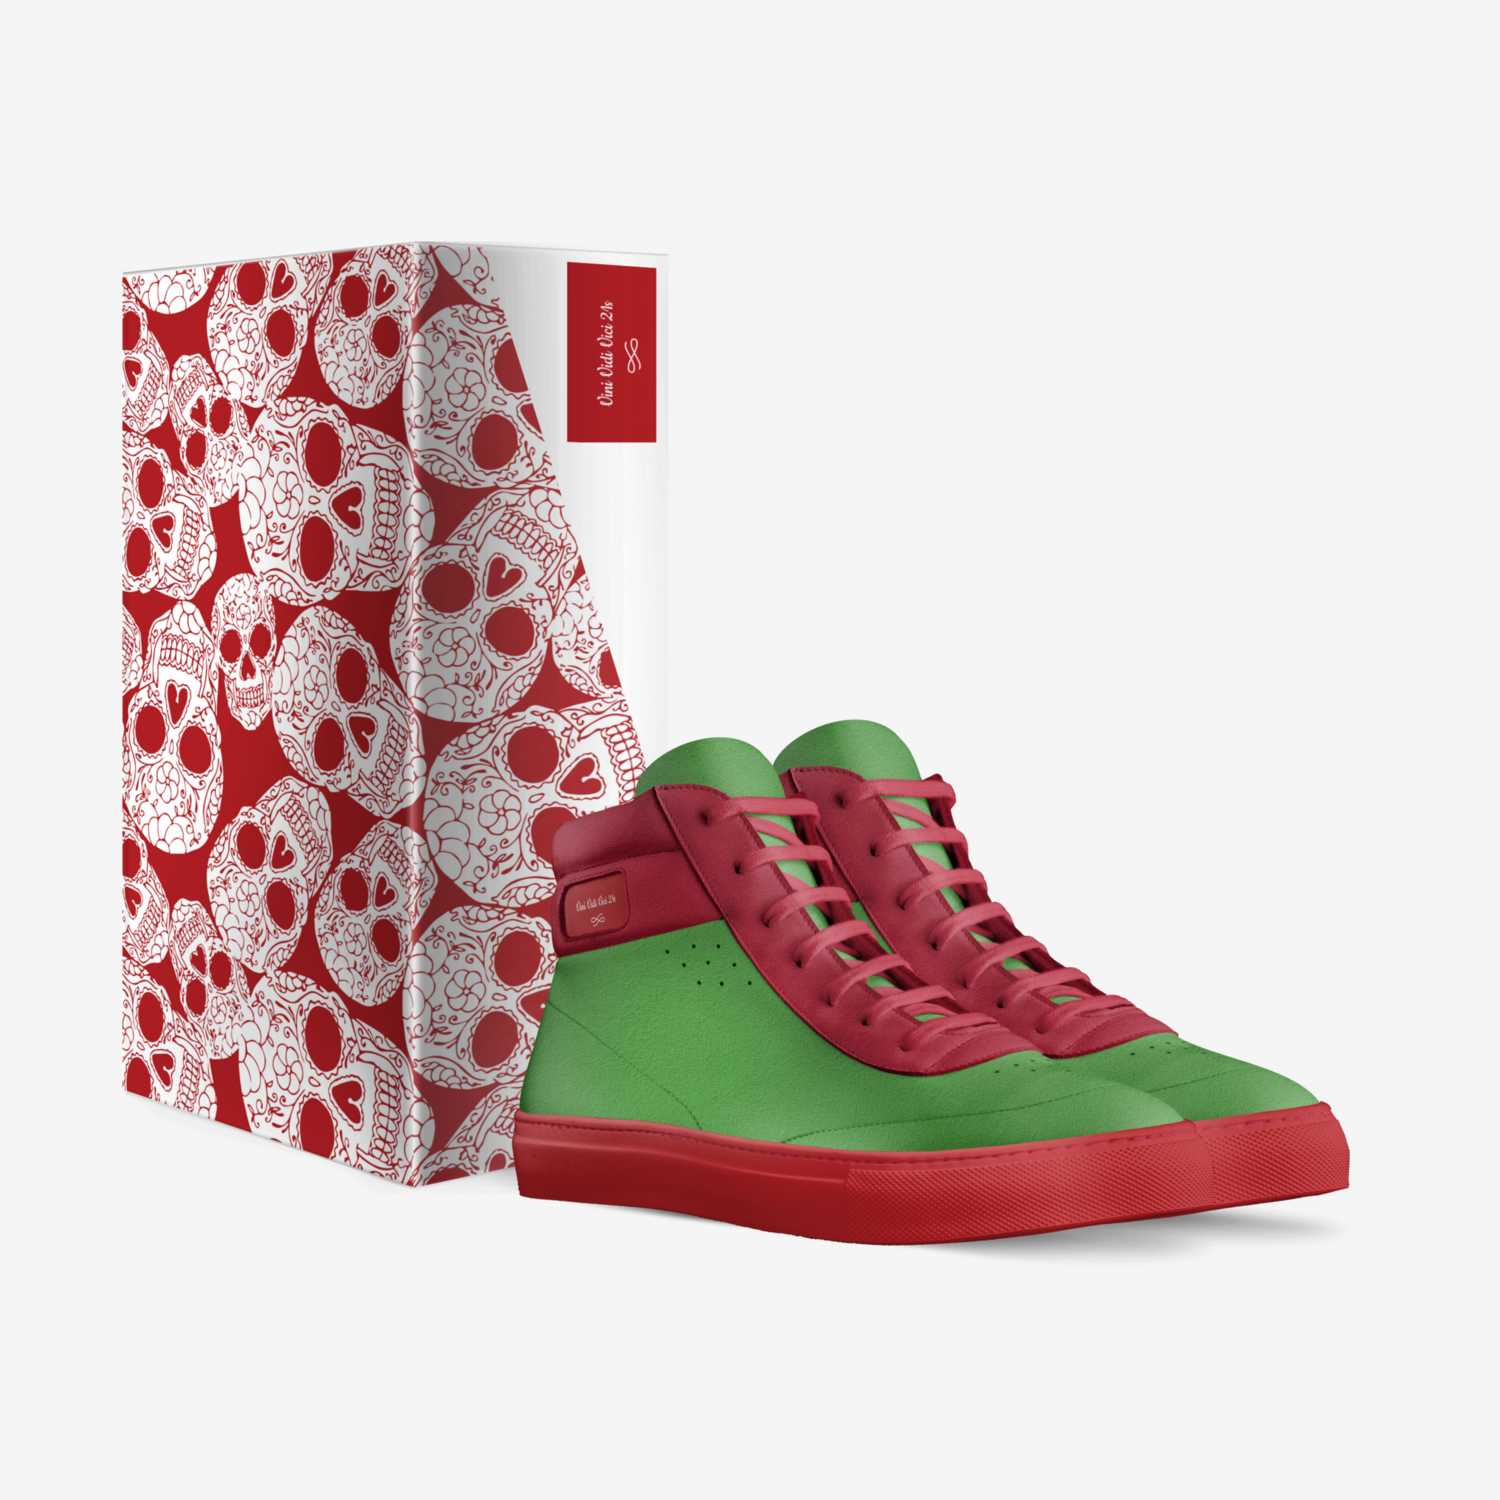 Vini Vidi Vici 21s custom made in Italy shoes by Joseph Smith | Box view